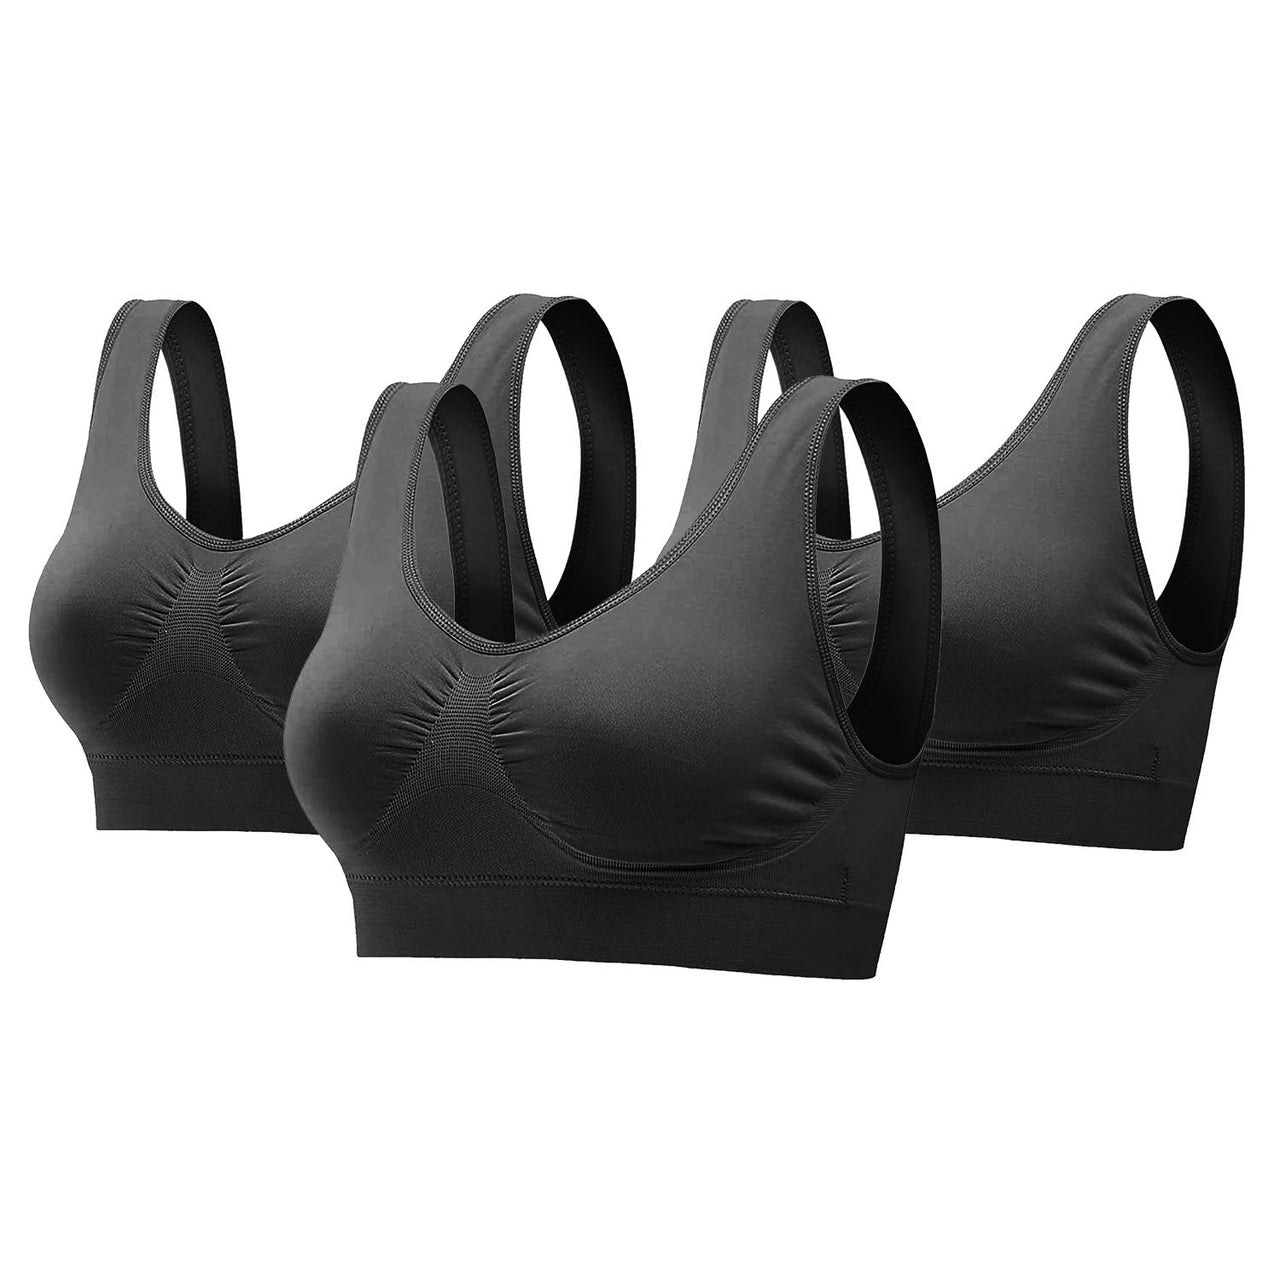 3 Pack Lightweight Wireless Sports Bras Tank Tops for Fitness Workout Sports Yoga Sleep Wear S - 4XL